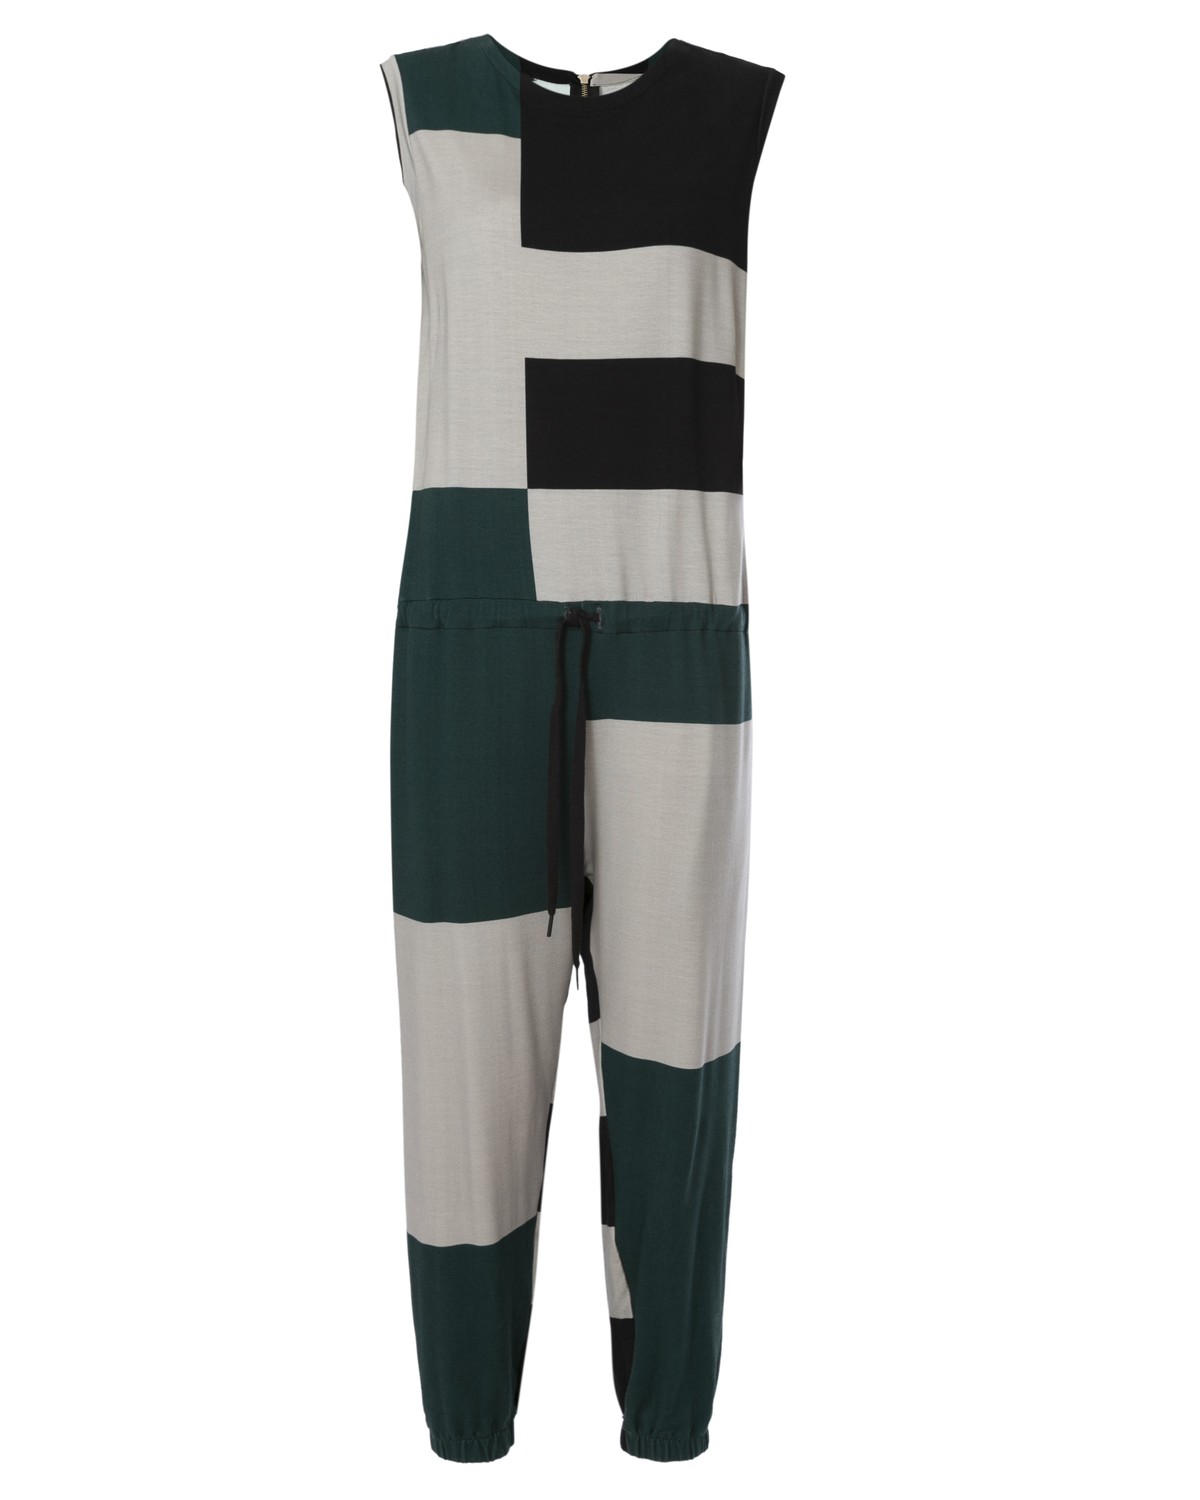 macacão com estampa geométrica | sleeveless printed jersey jumpsuit